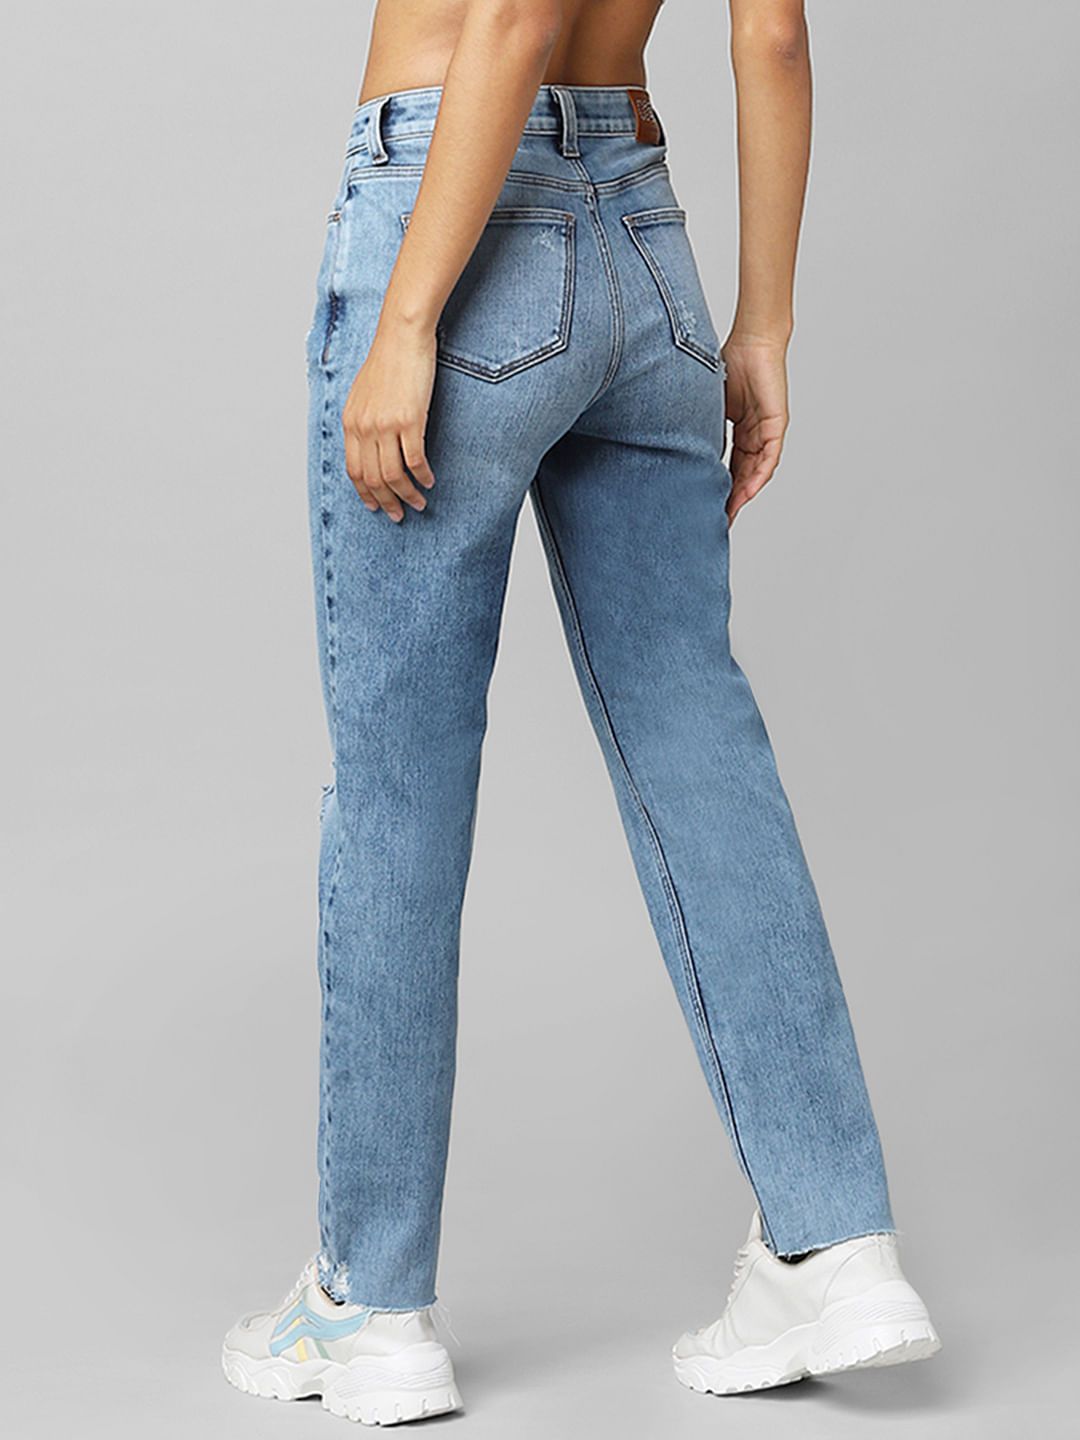 Buy SweatyRocks Womens Casual Boyfriend Jeans High Rise Denim Pants with  Pocket Blue XS at Amazonin